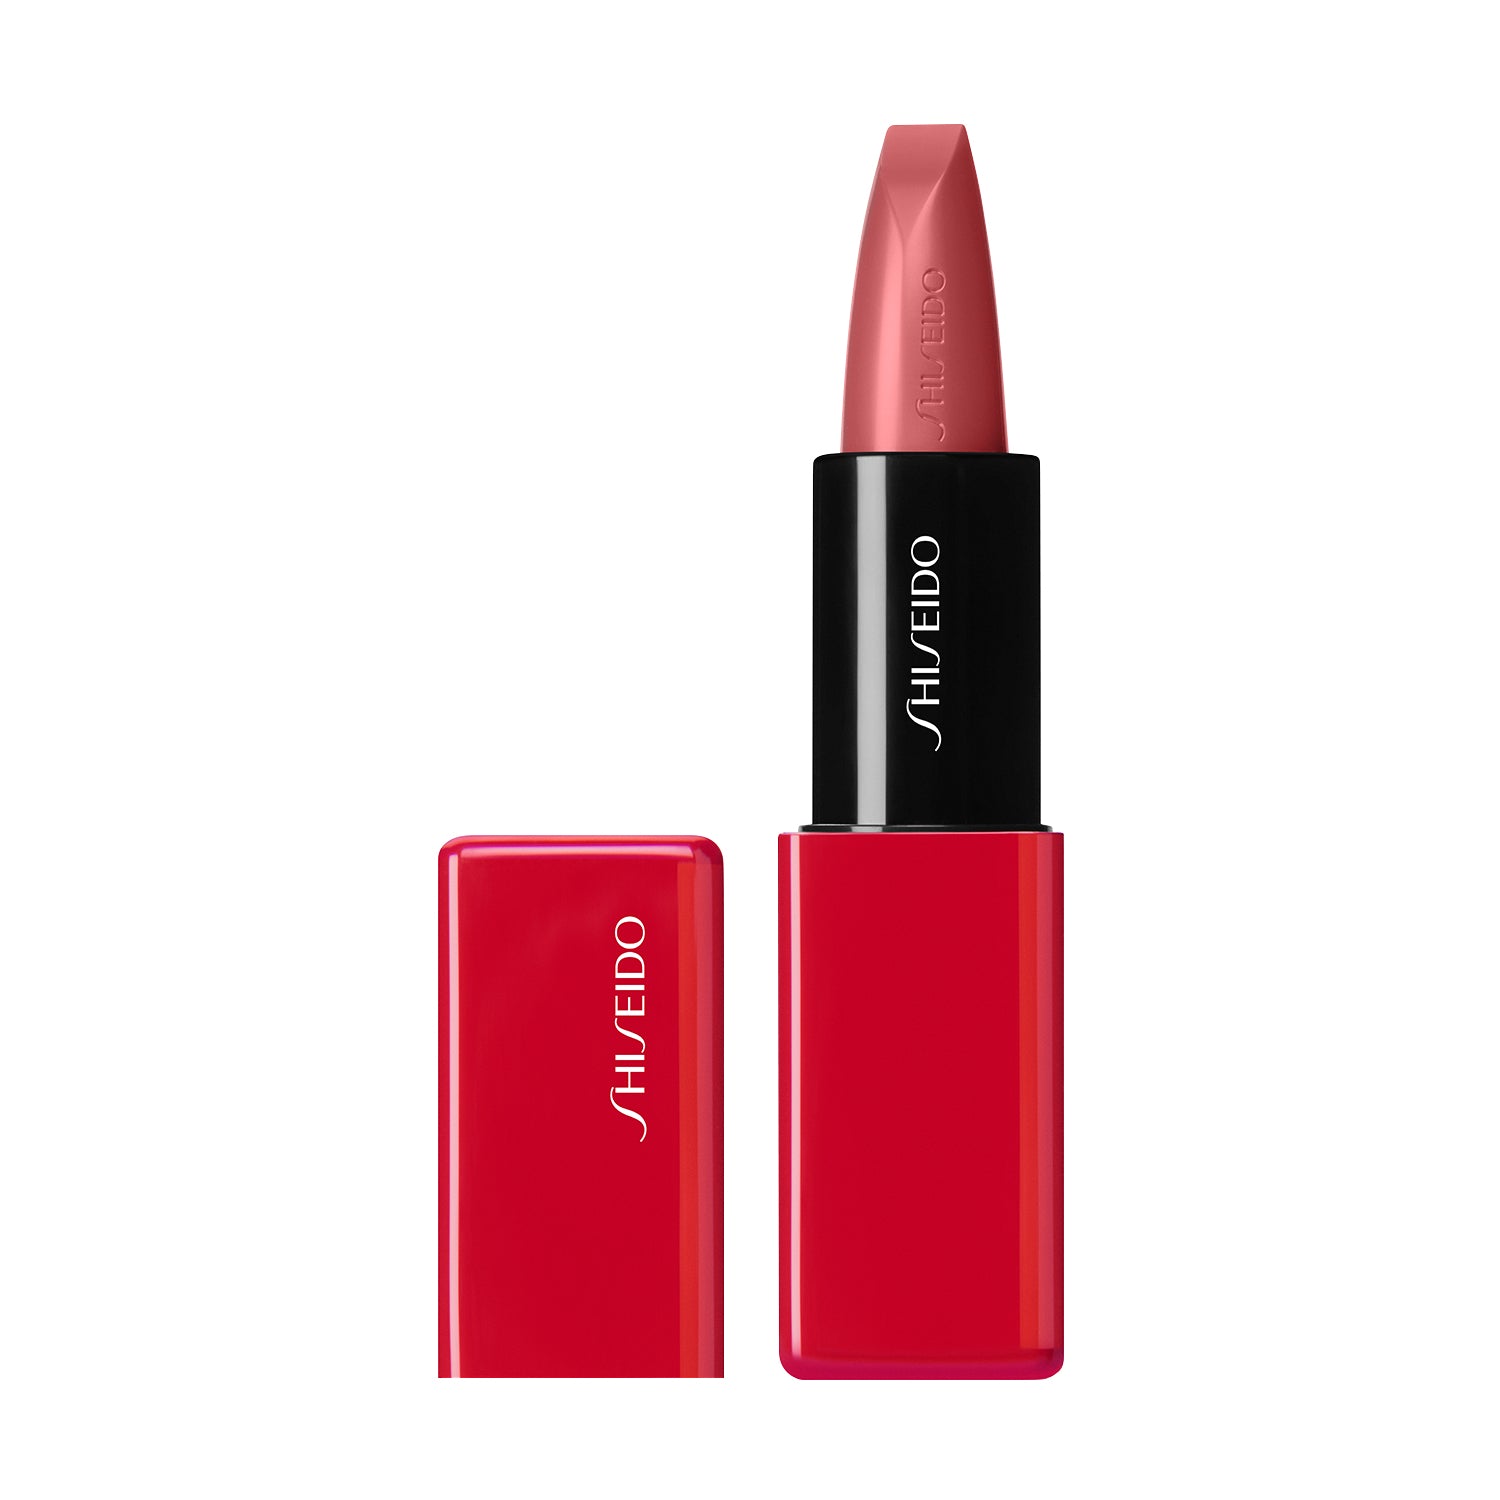 SHISEIDO Makeup Techno Satin Gel Lipstick